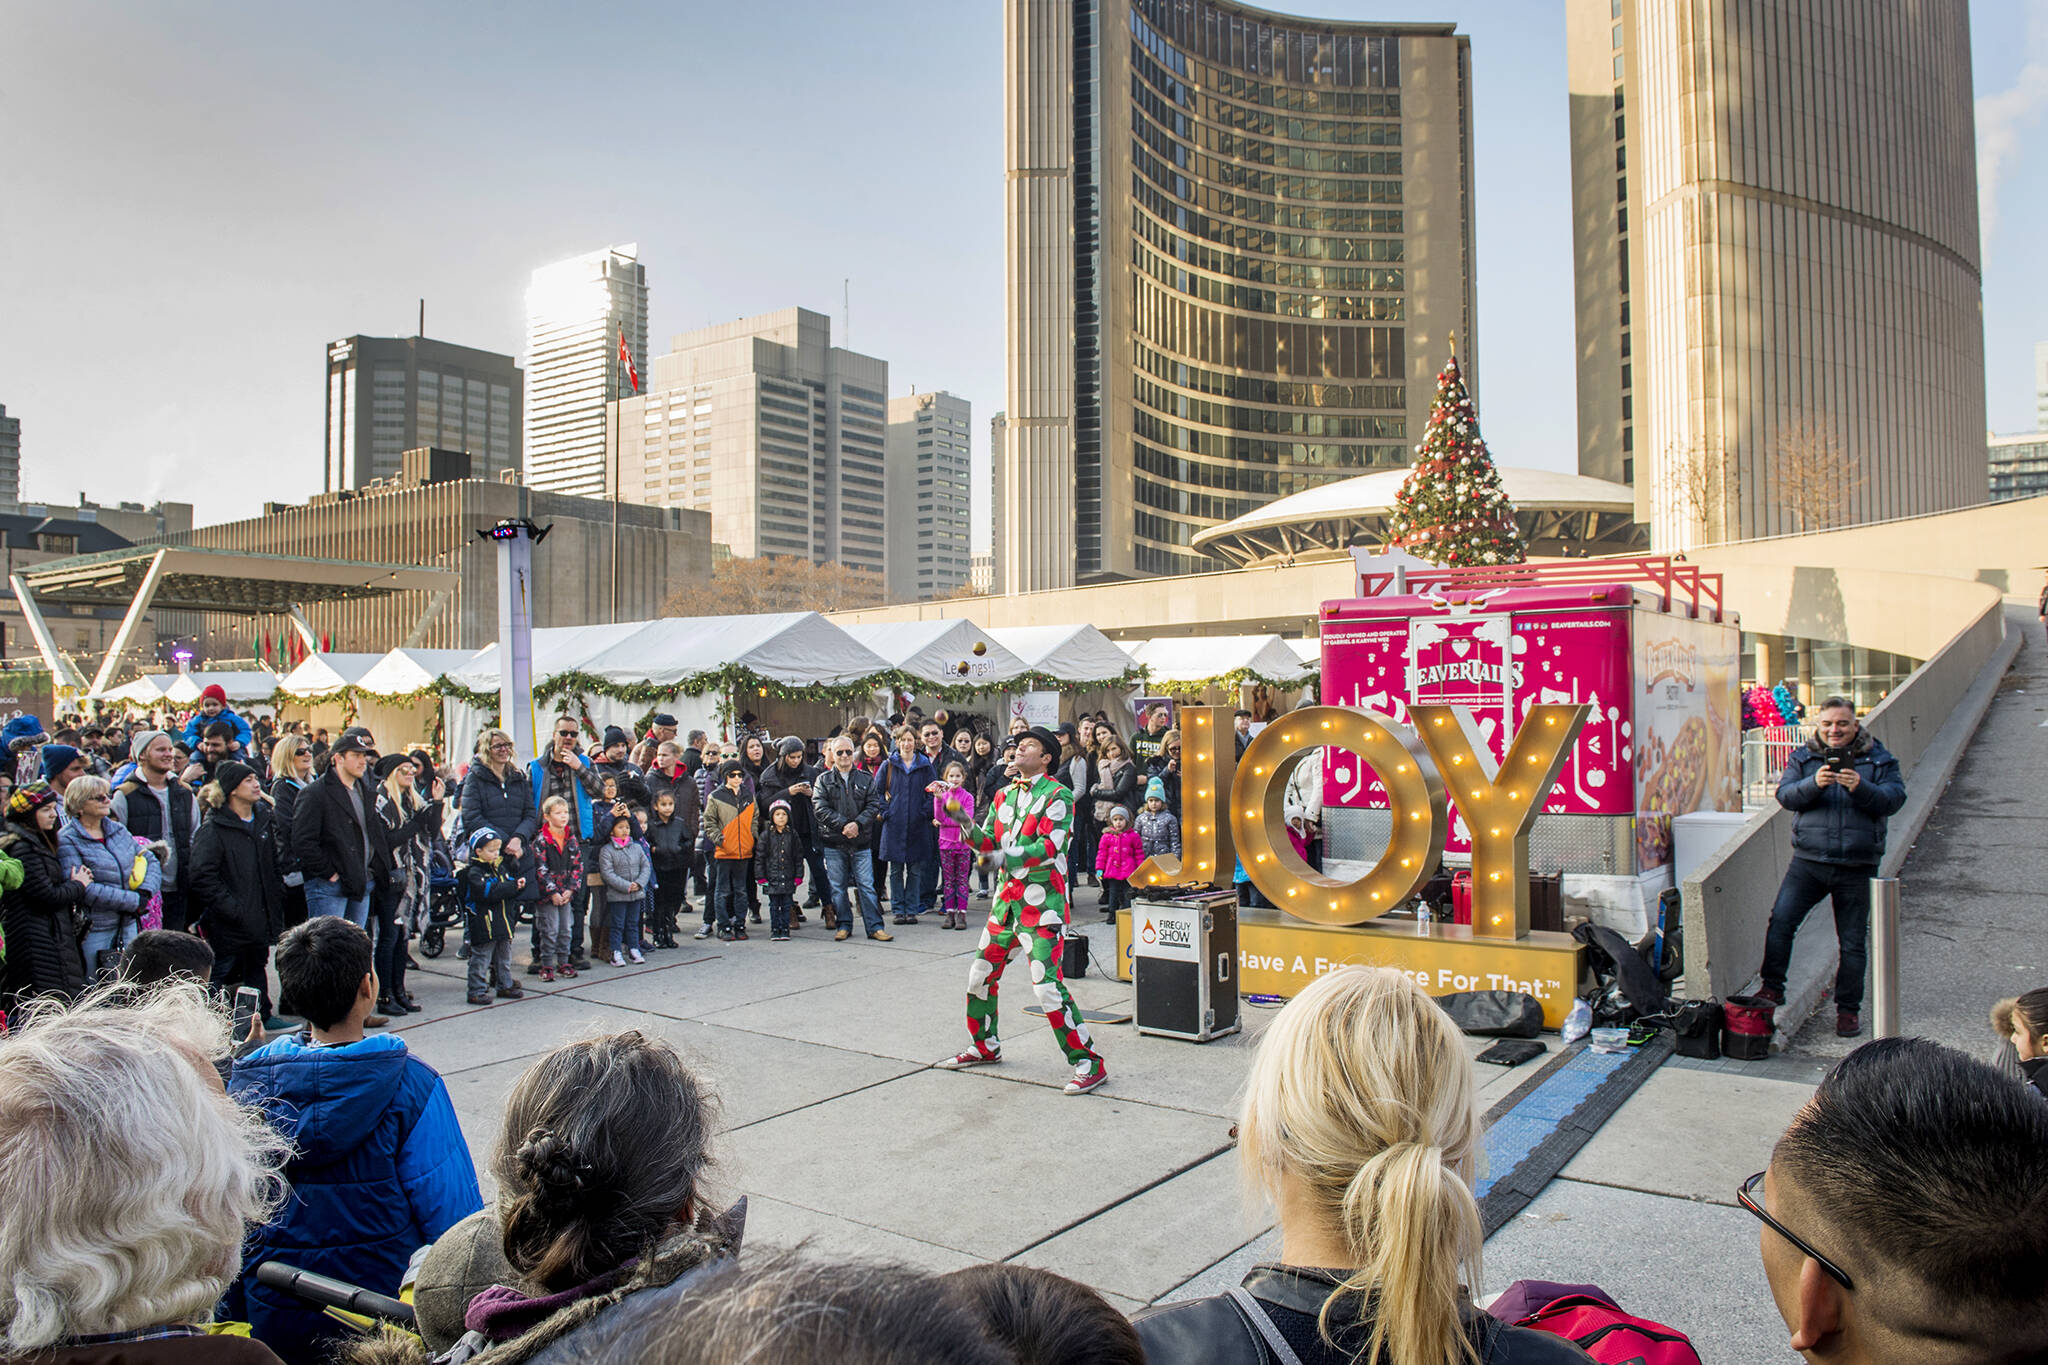 Downtown Toronto just got a huge new holiday fair